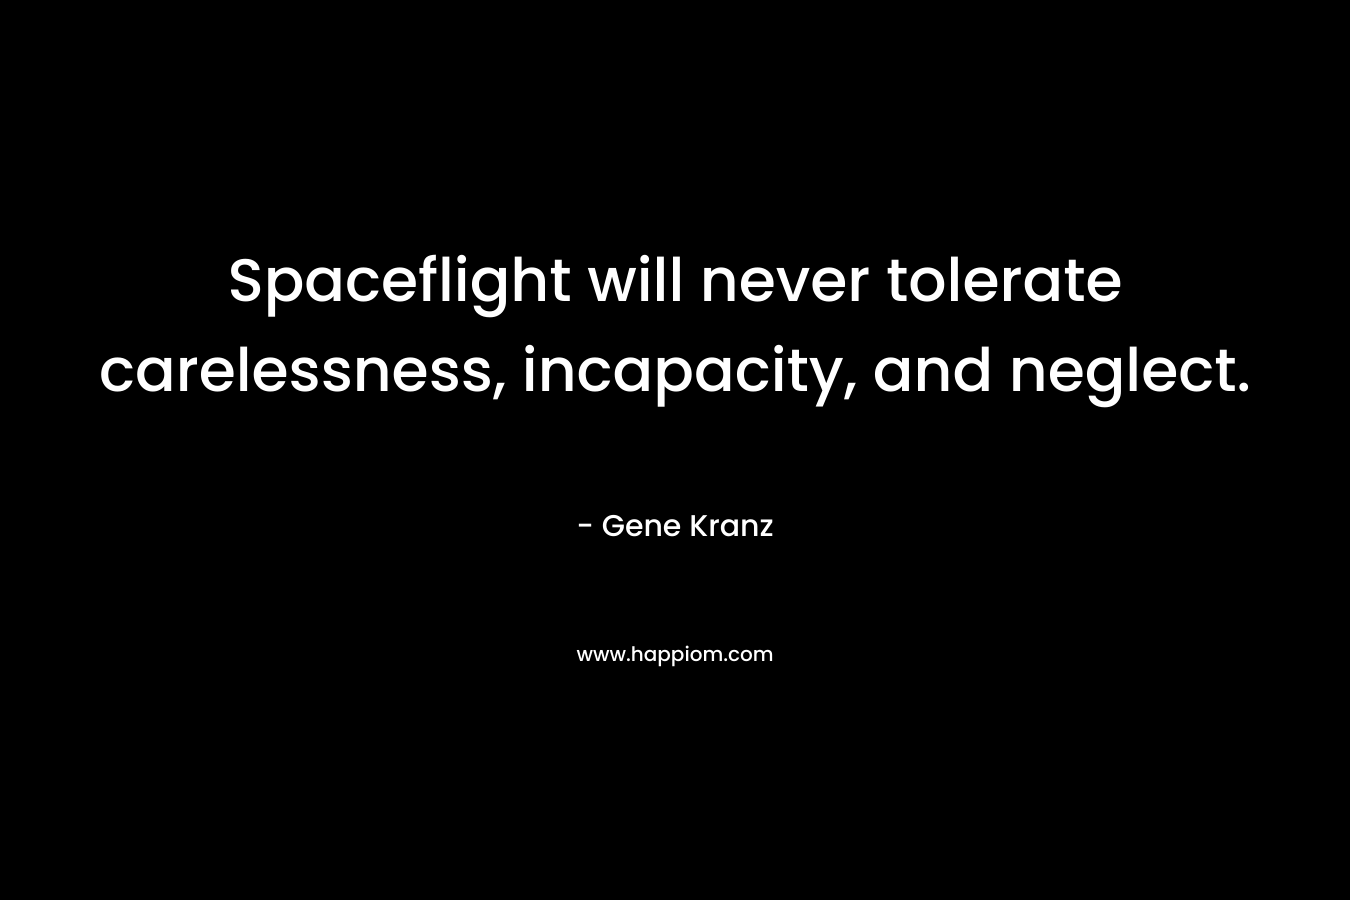 Spaceflight will never tolerate carelessness, incapacity, and neglect. – Gene Kranz